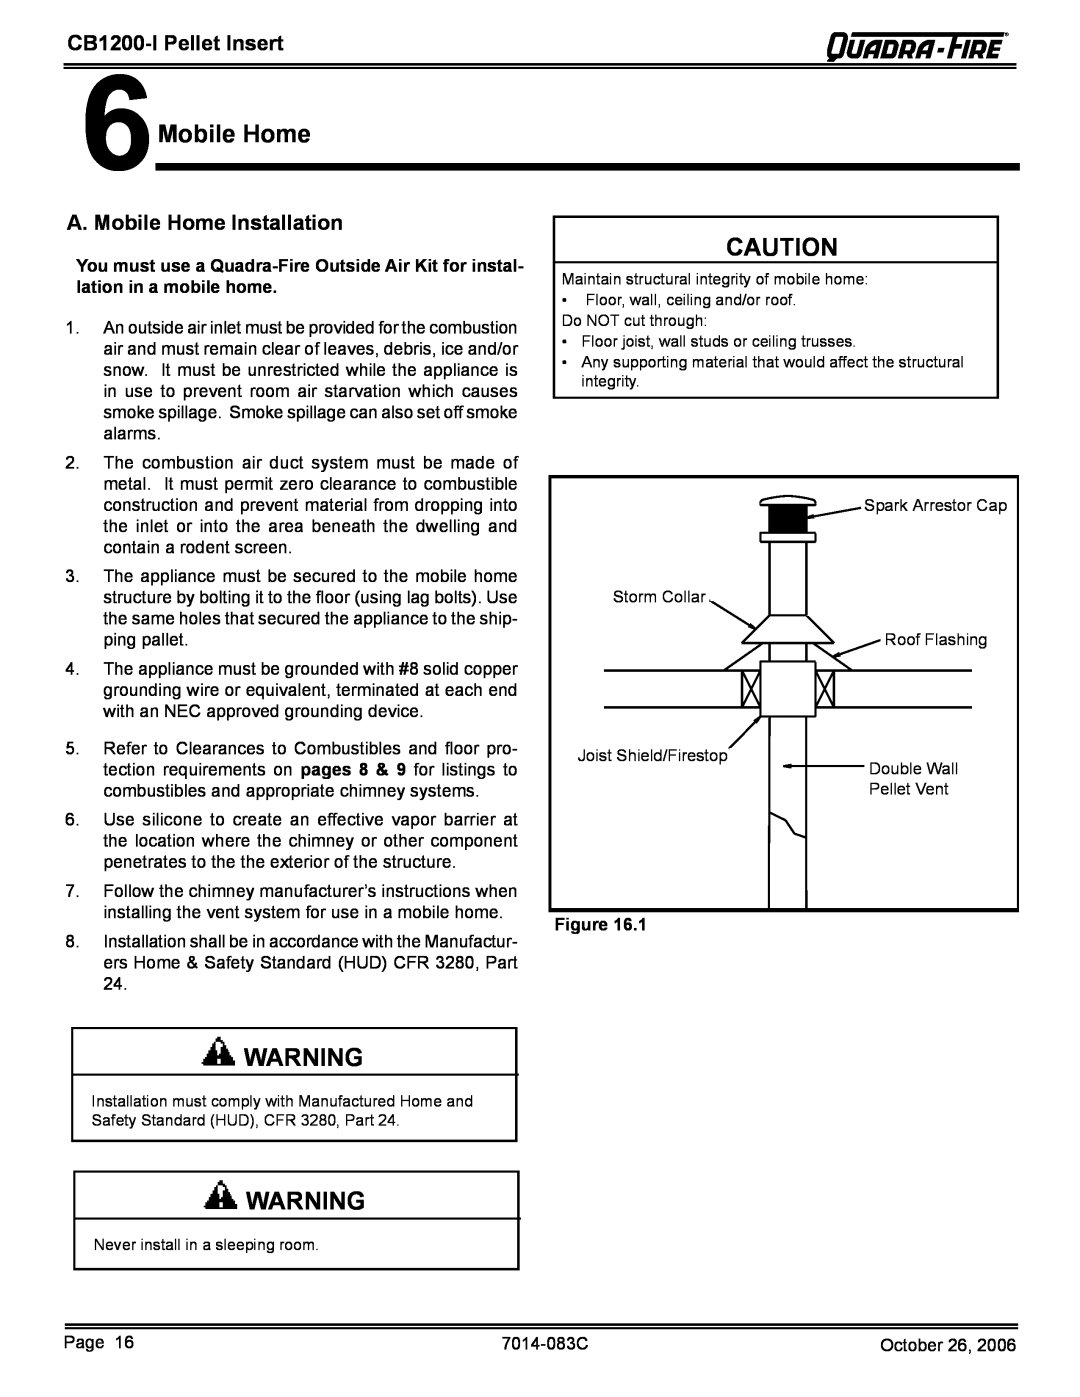 Quadra-Fire CB1200I-B owner manual A. Mobile Home Installation, CB1200-IPellet Insert 